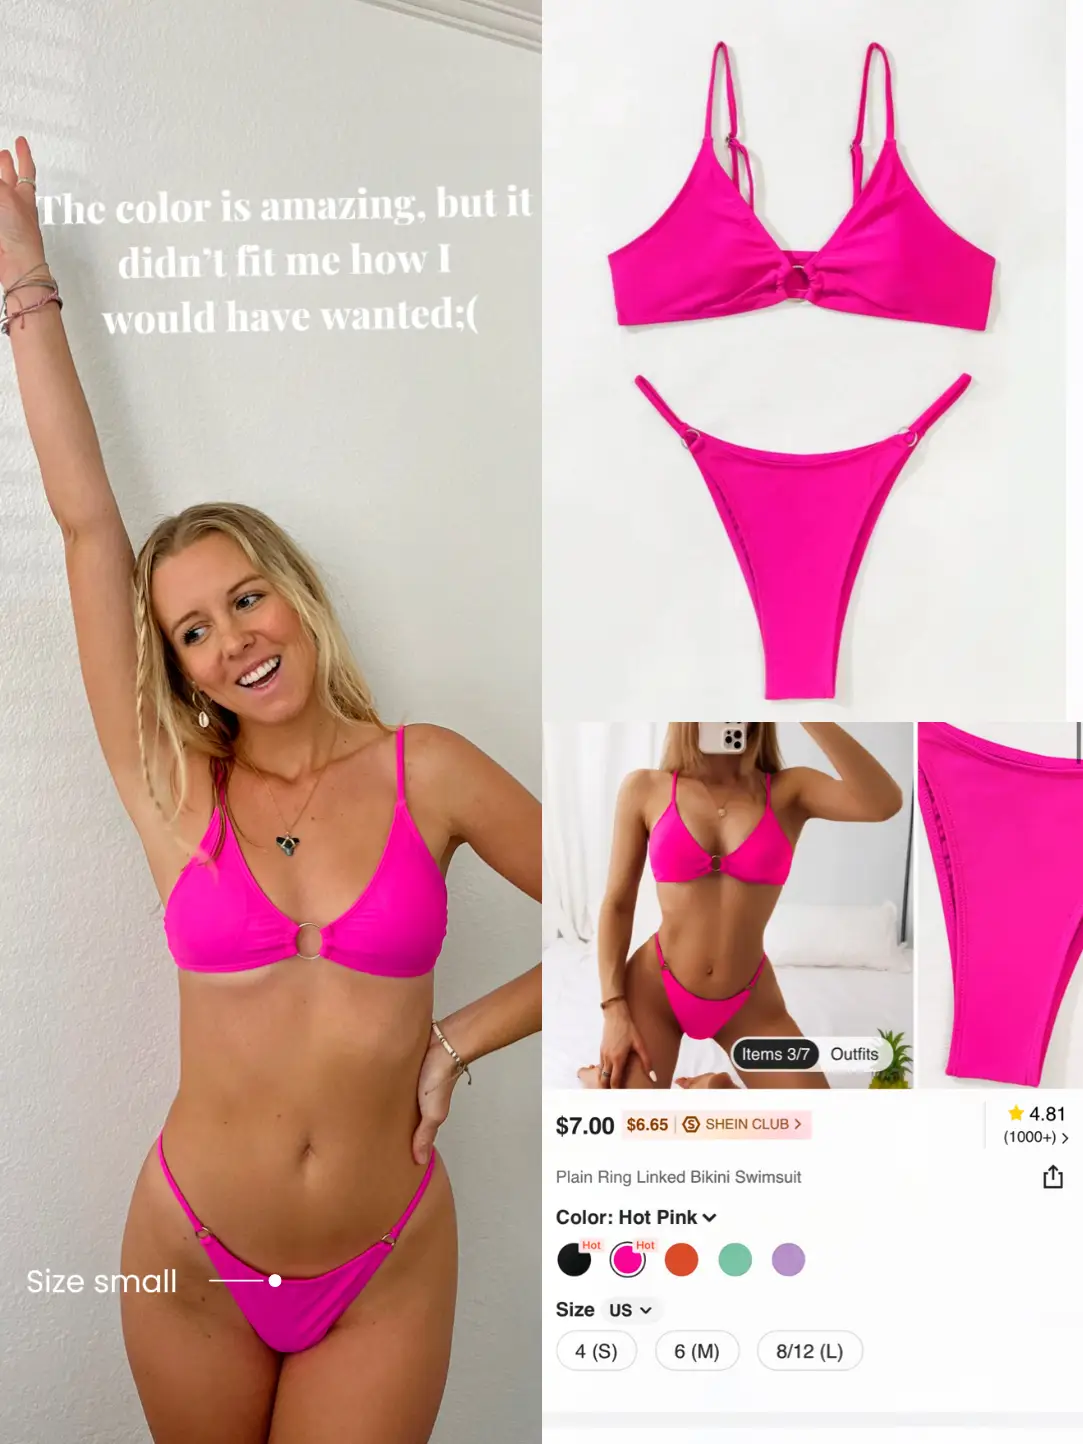 Shoppers baffled by ultra tiny Shein bikini: 'Why bother?